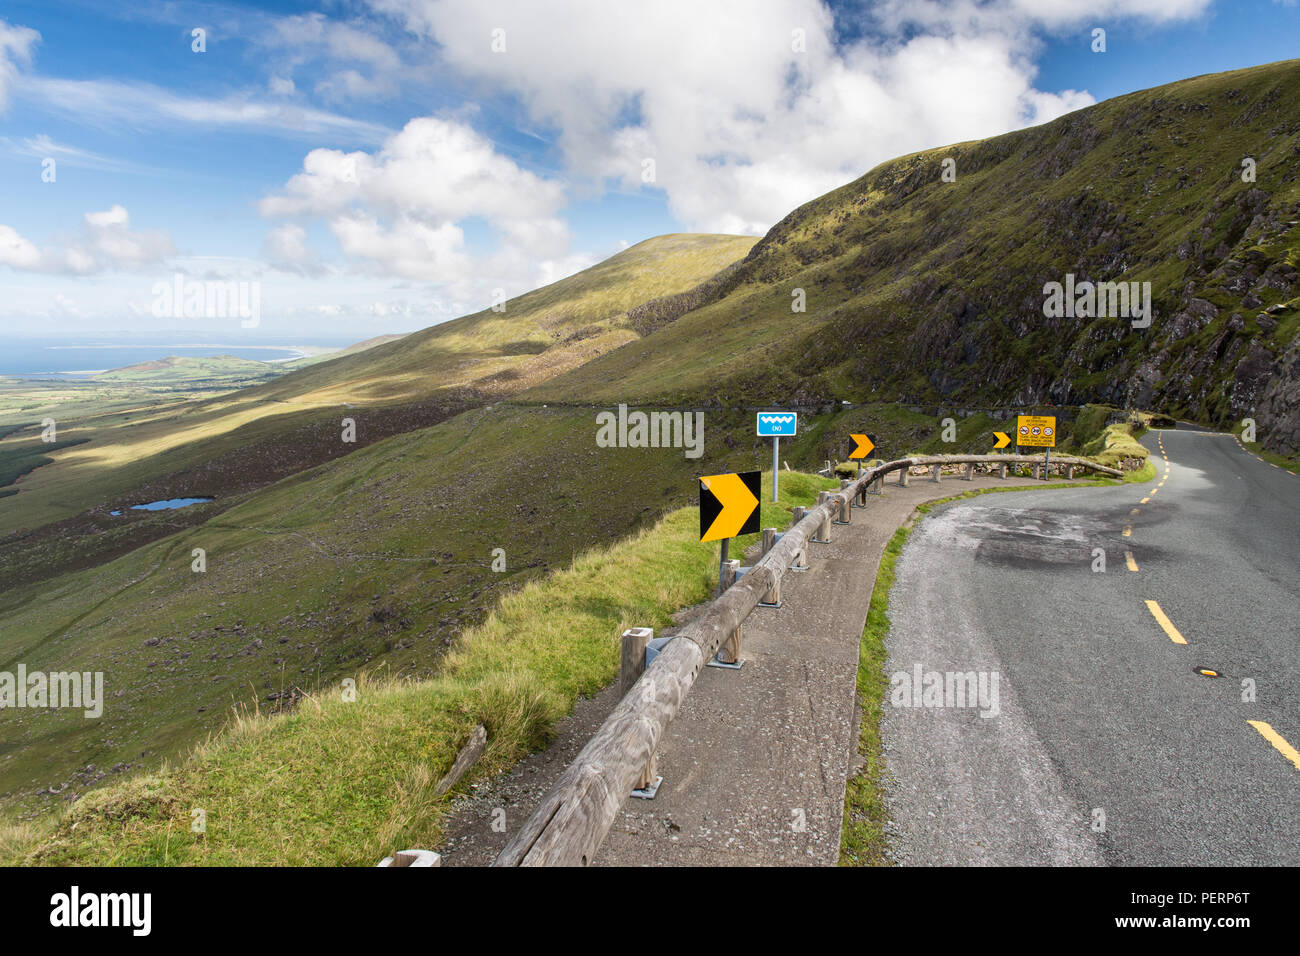 Touring motorists cross the mountains of Ireland's Dingle Peninsula on the narrow winding Conor Pass road. Stock Photo